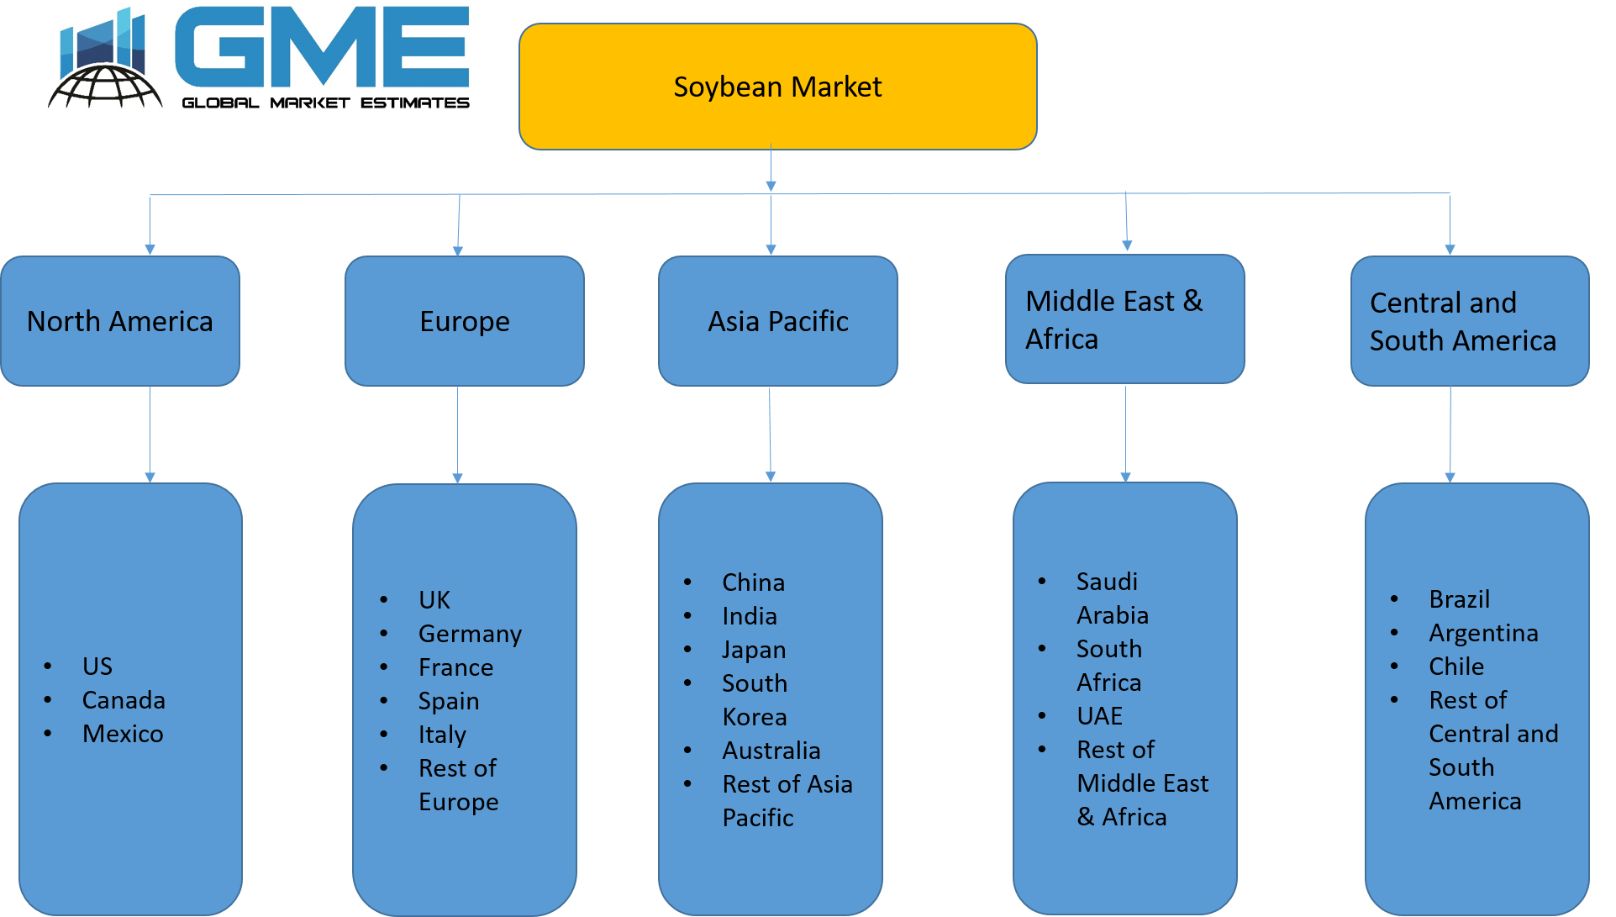 Soybean Market - Regional Analysis